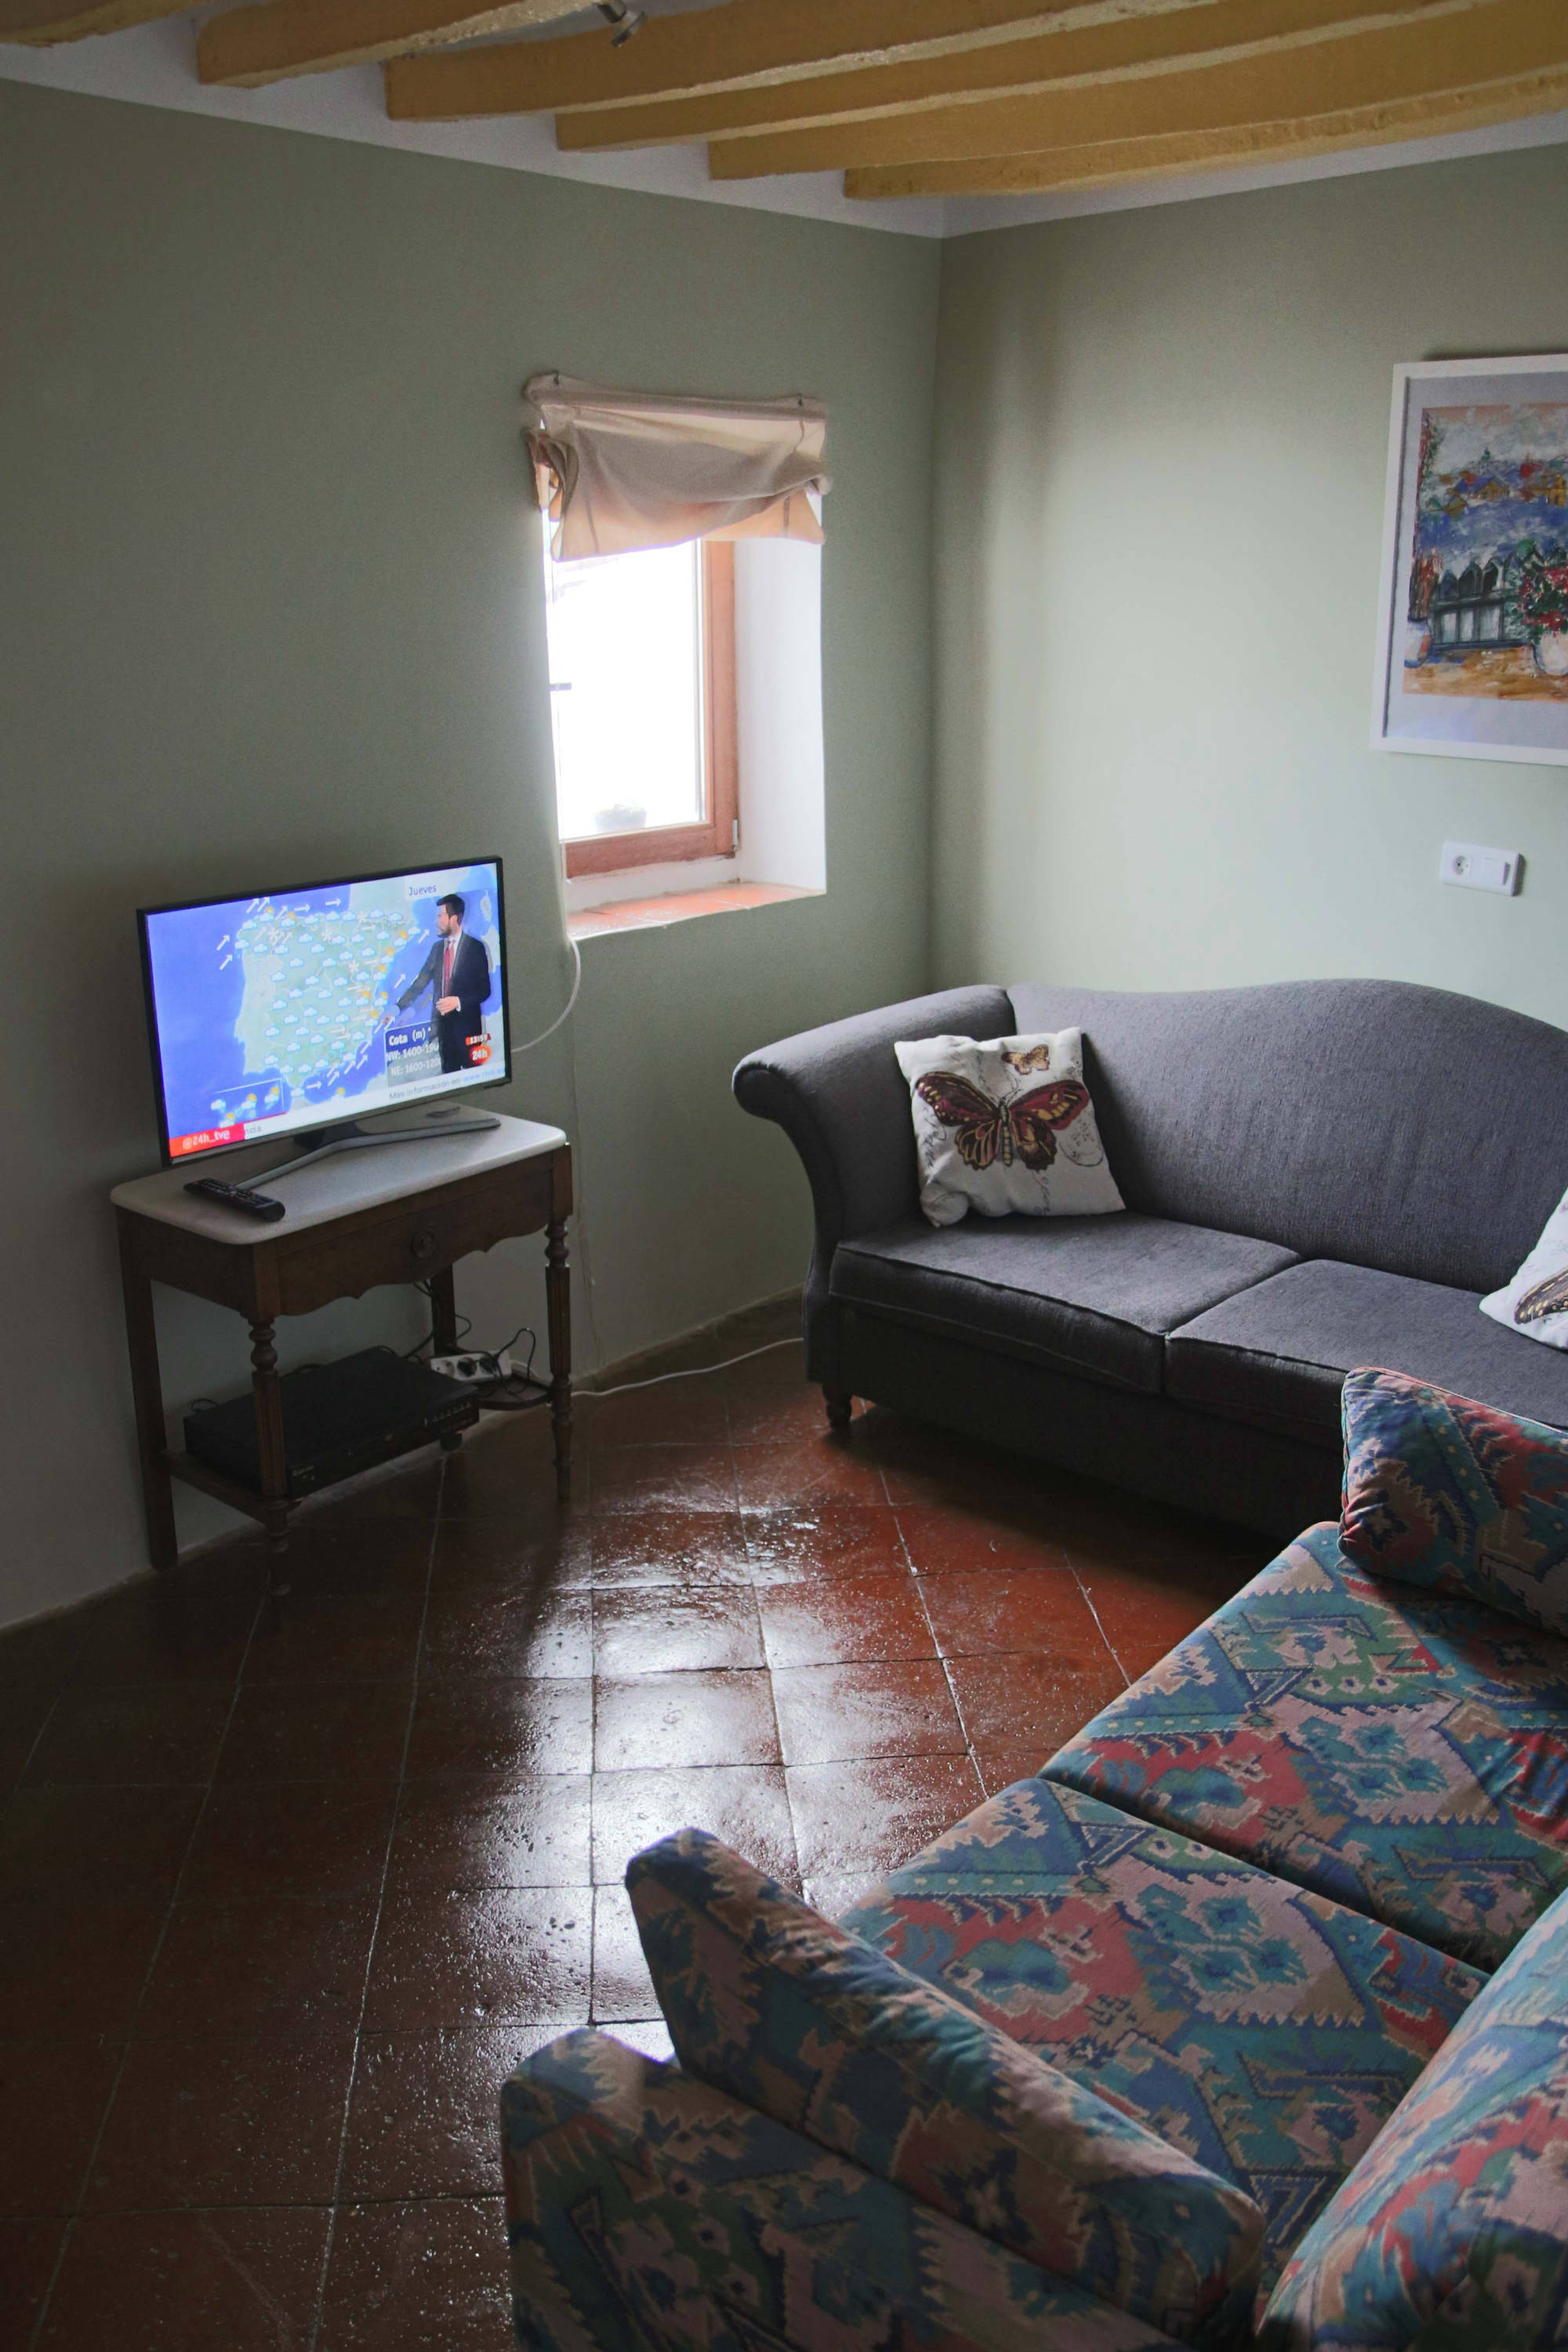 Competa direct rental of a romantic tow house in Cosata del Sol